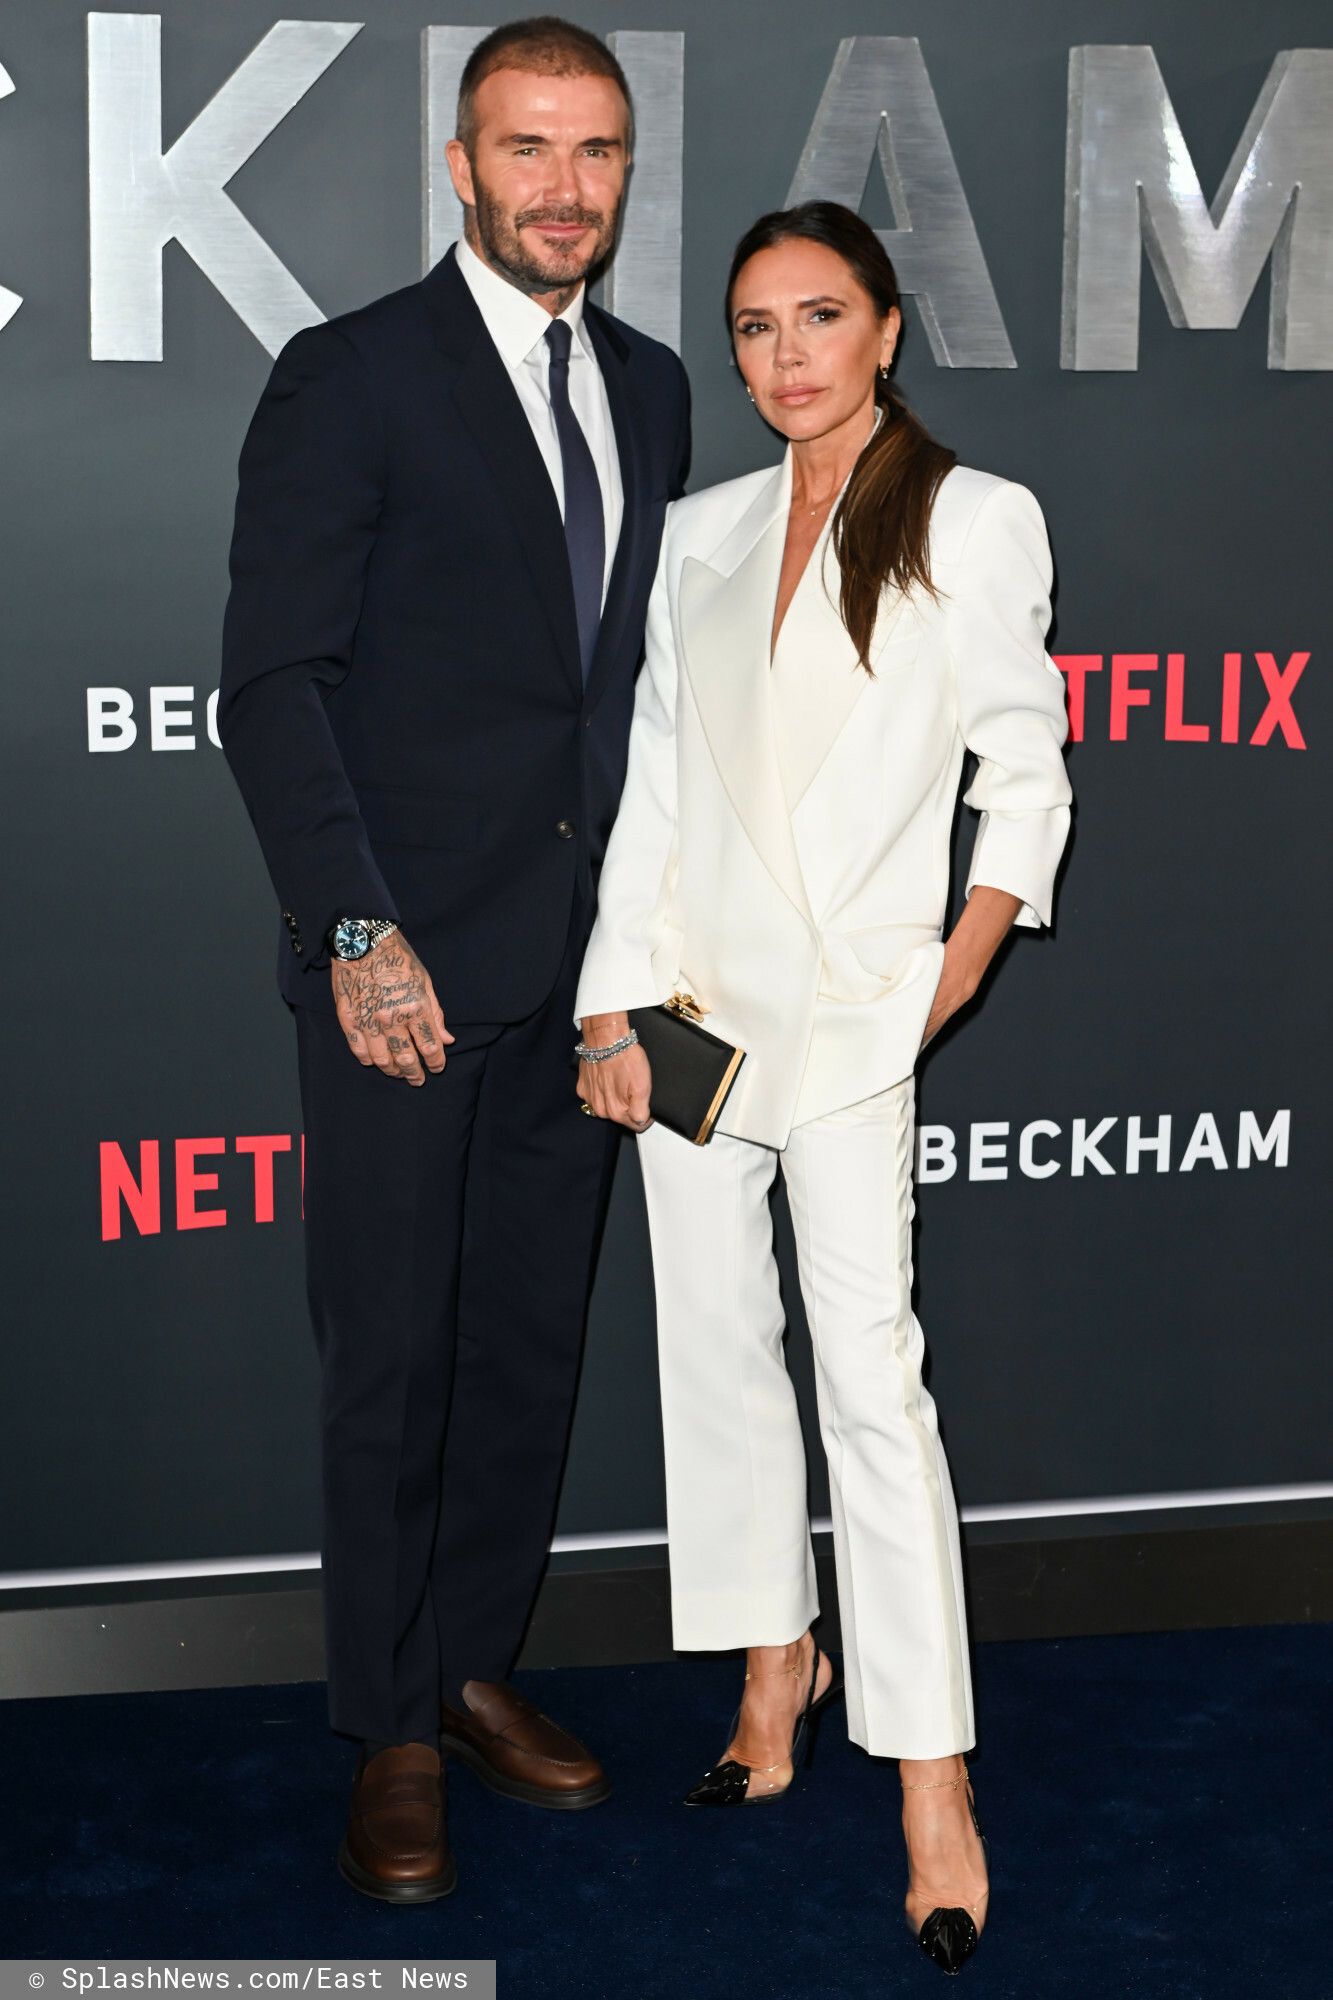 David i Victoria Beckhamowie na premierze dokumentu Netflixa, fot. EastNews